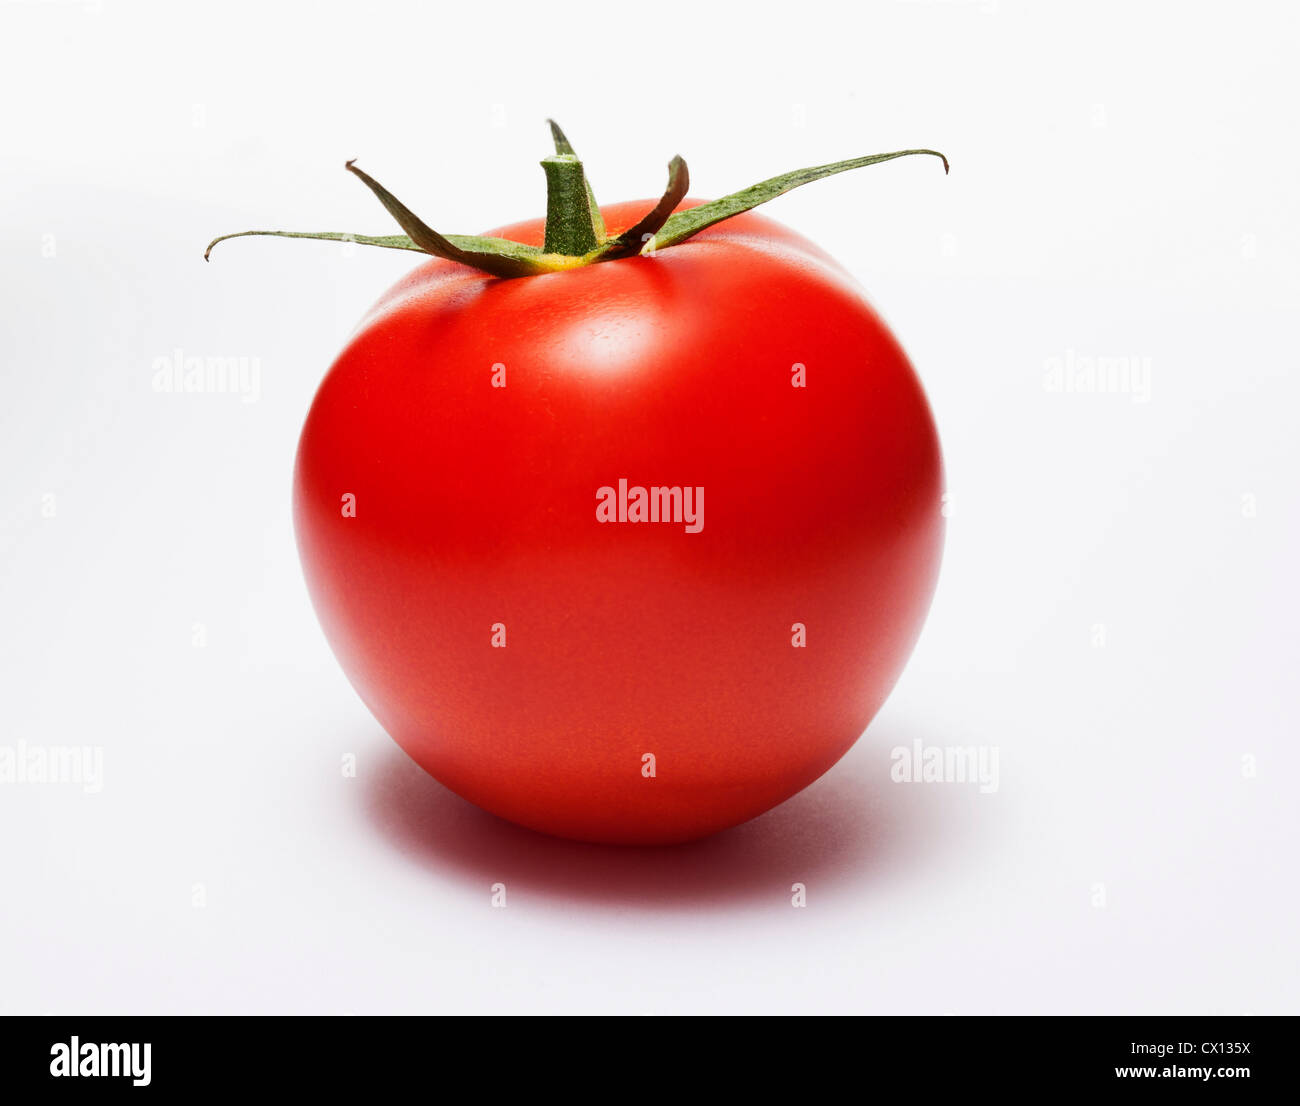 Red tomato Stock Photo